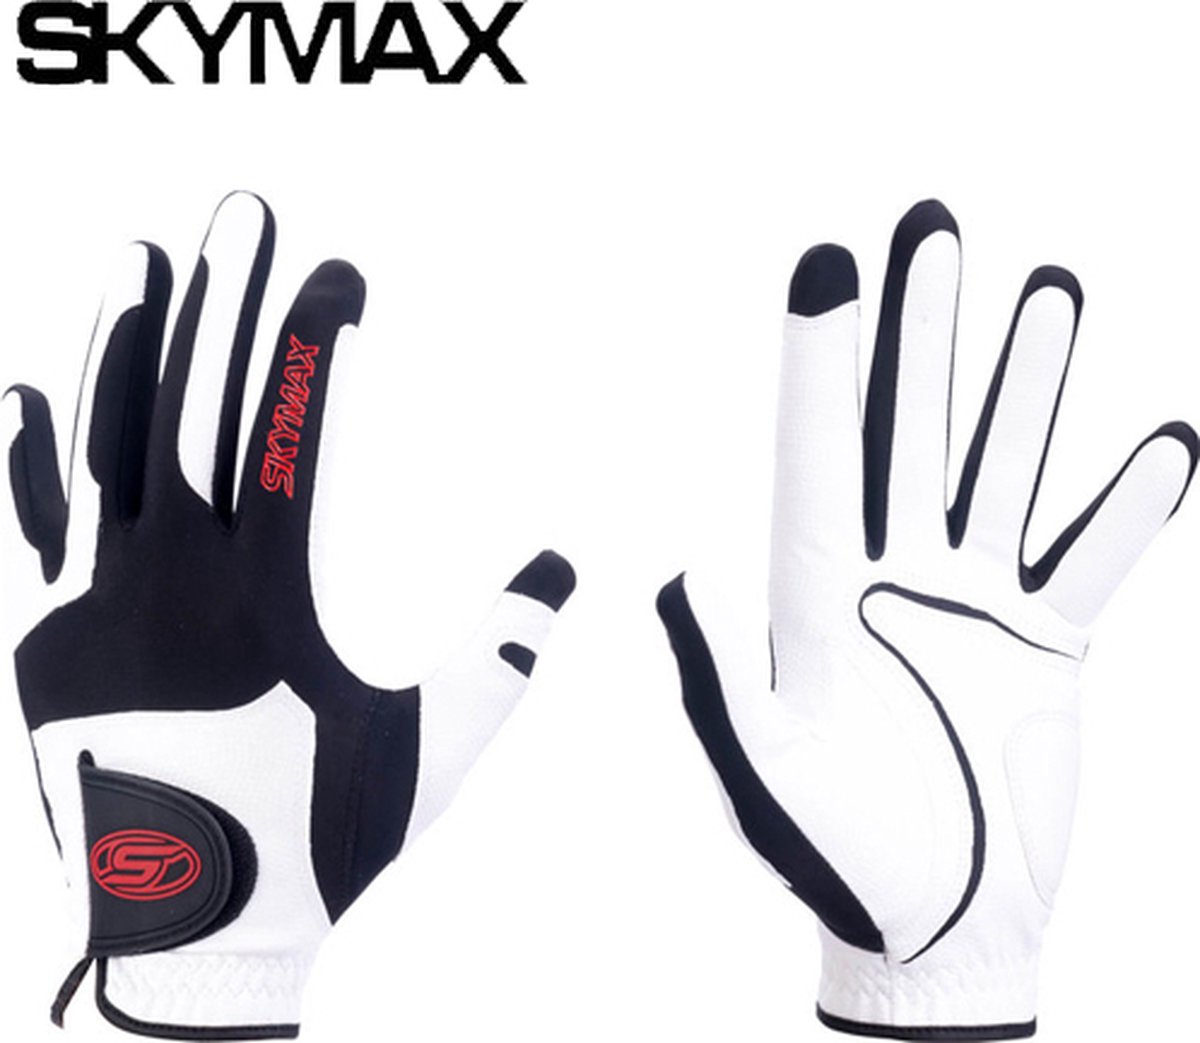 Skymax One Size Fits All Golfhandschoen, wit/zwart